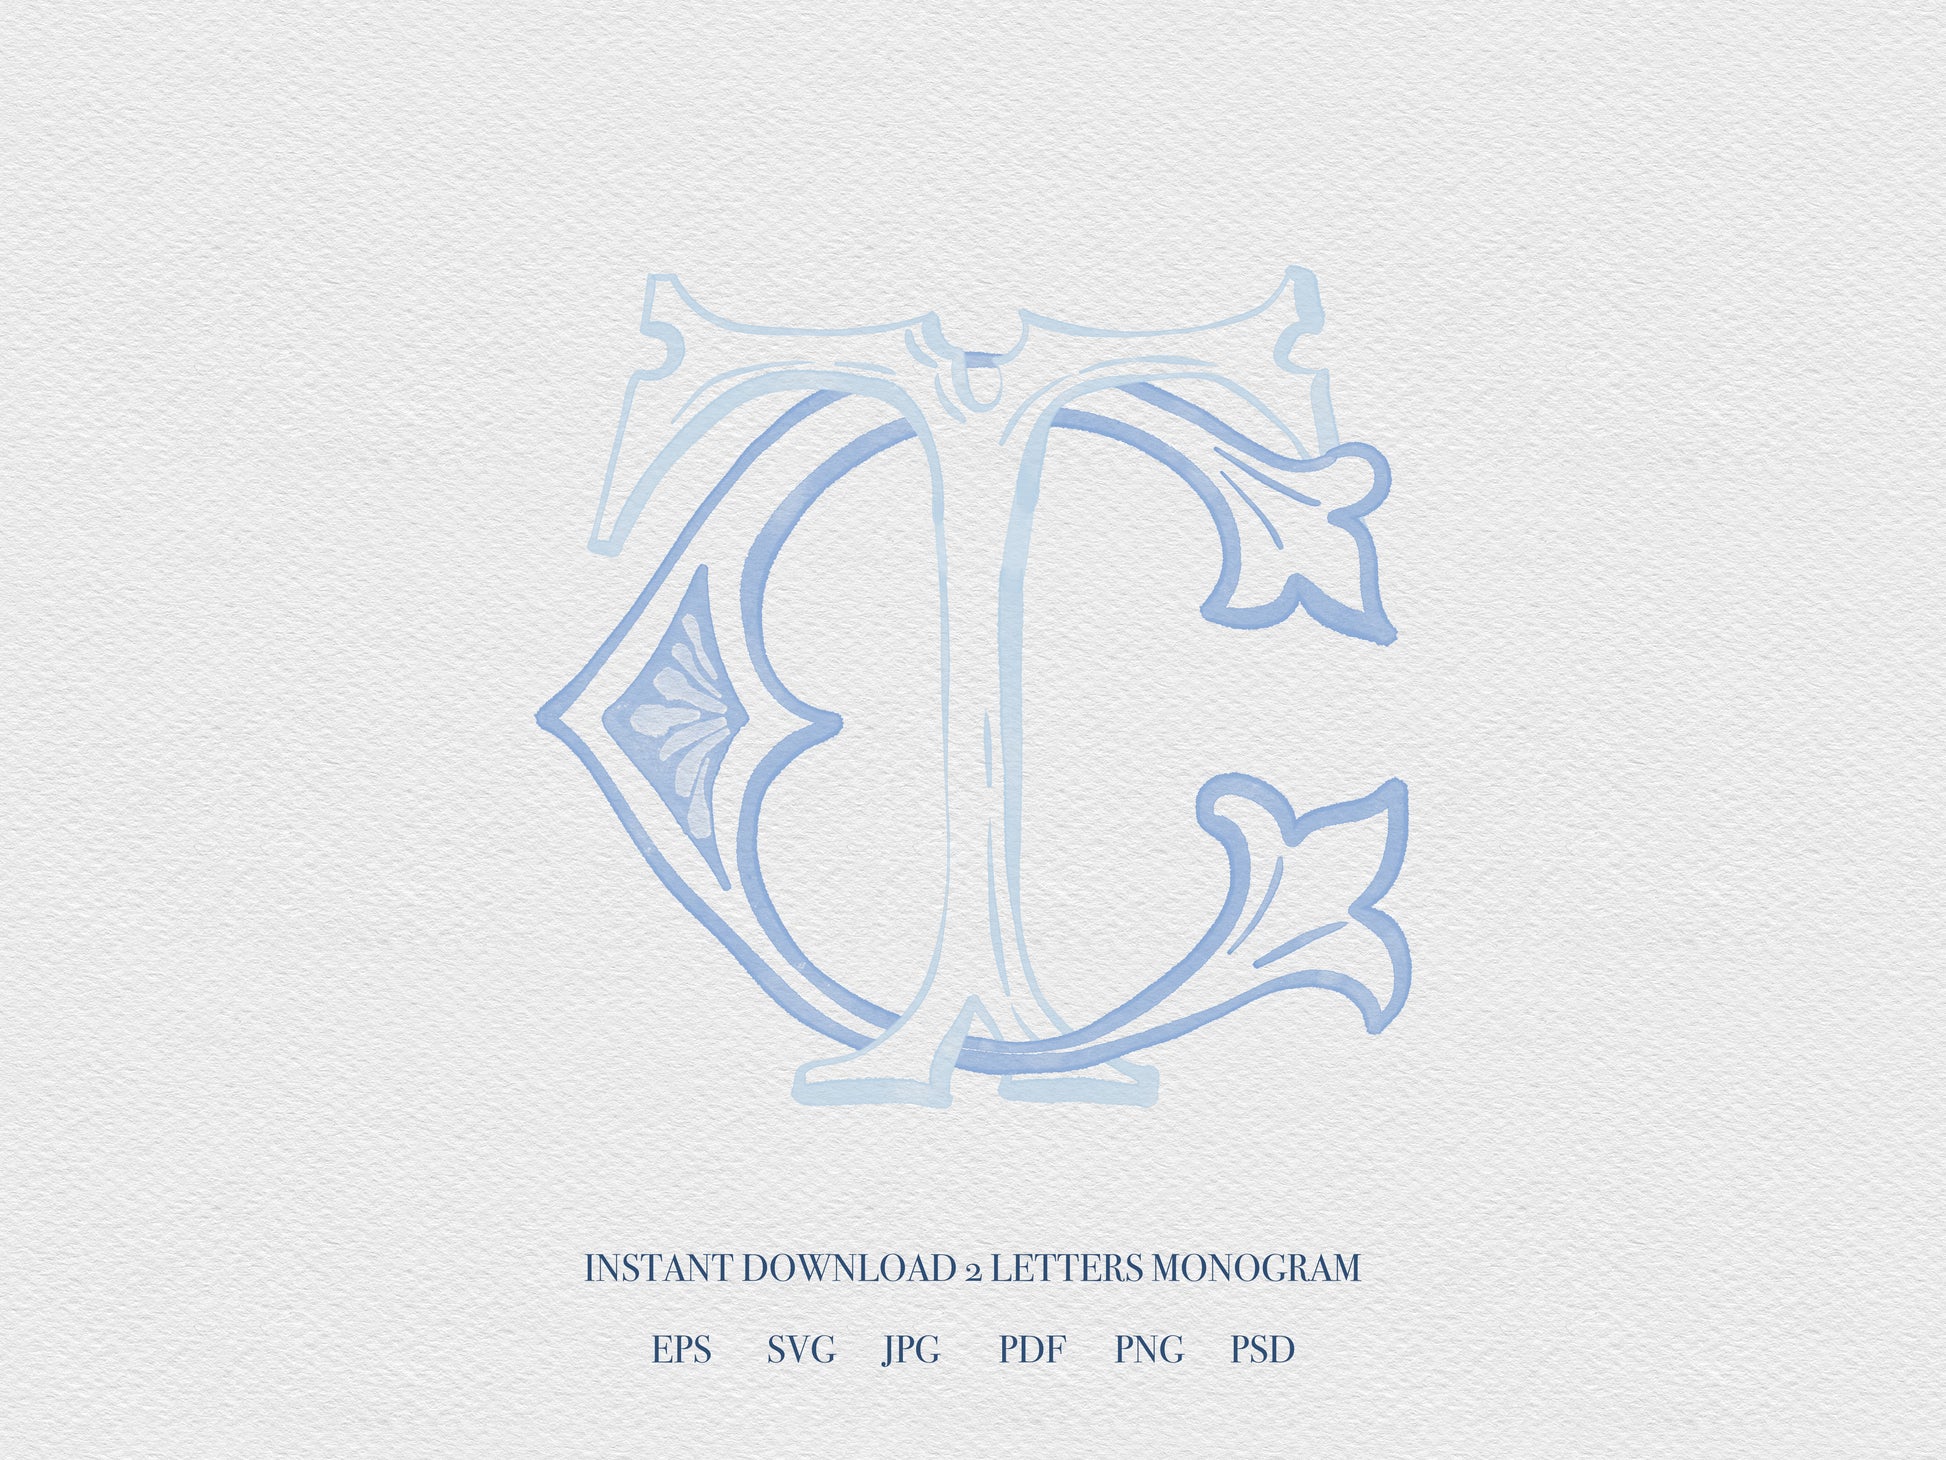 2 Letter Monogram with Letters CT TC | Digital Download - Wedding Monogram SVG, Personal Logo, Wedding Logo for Wedding Invitations The Wedding Crest Lab